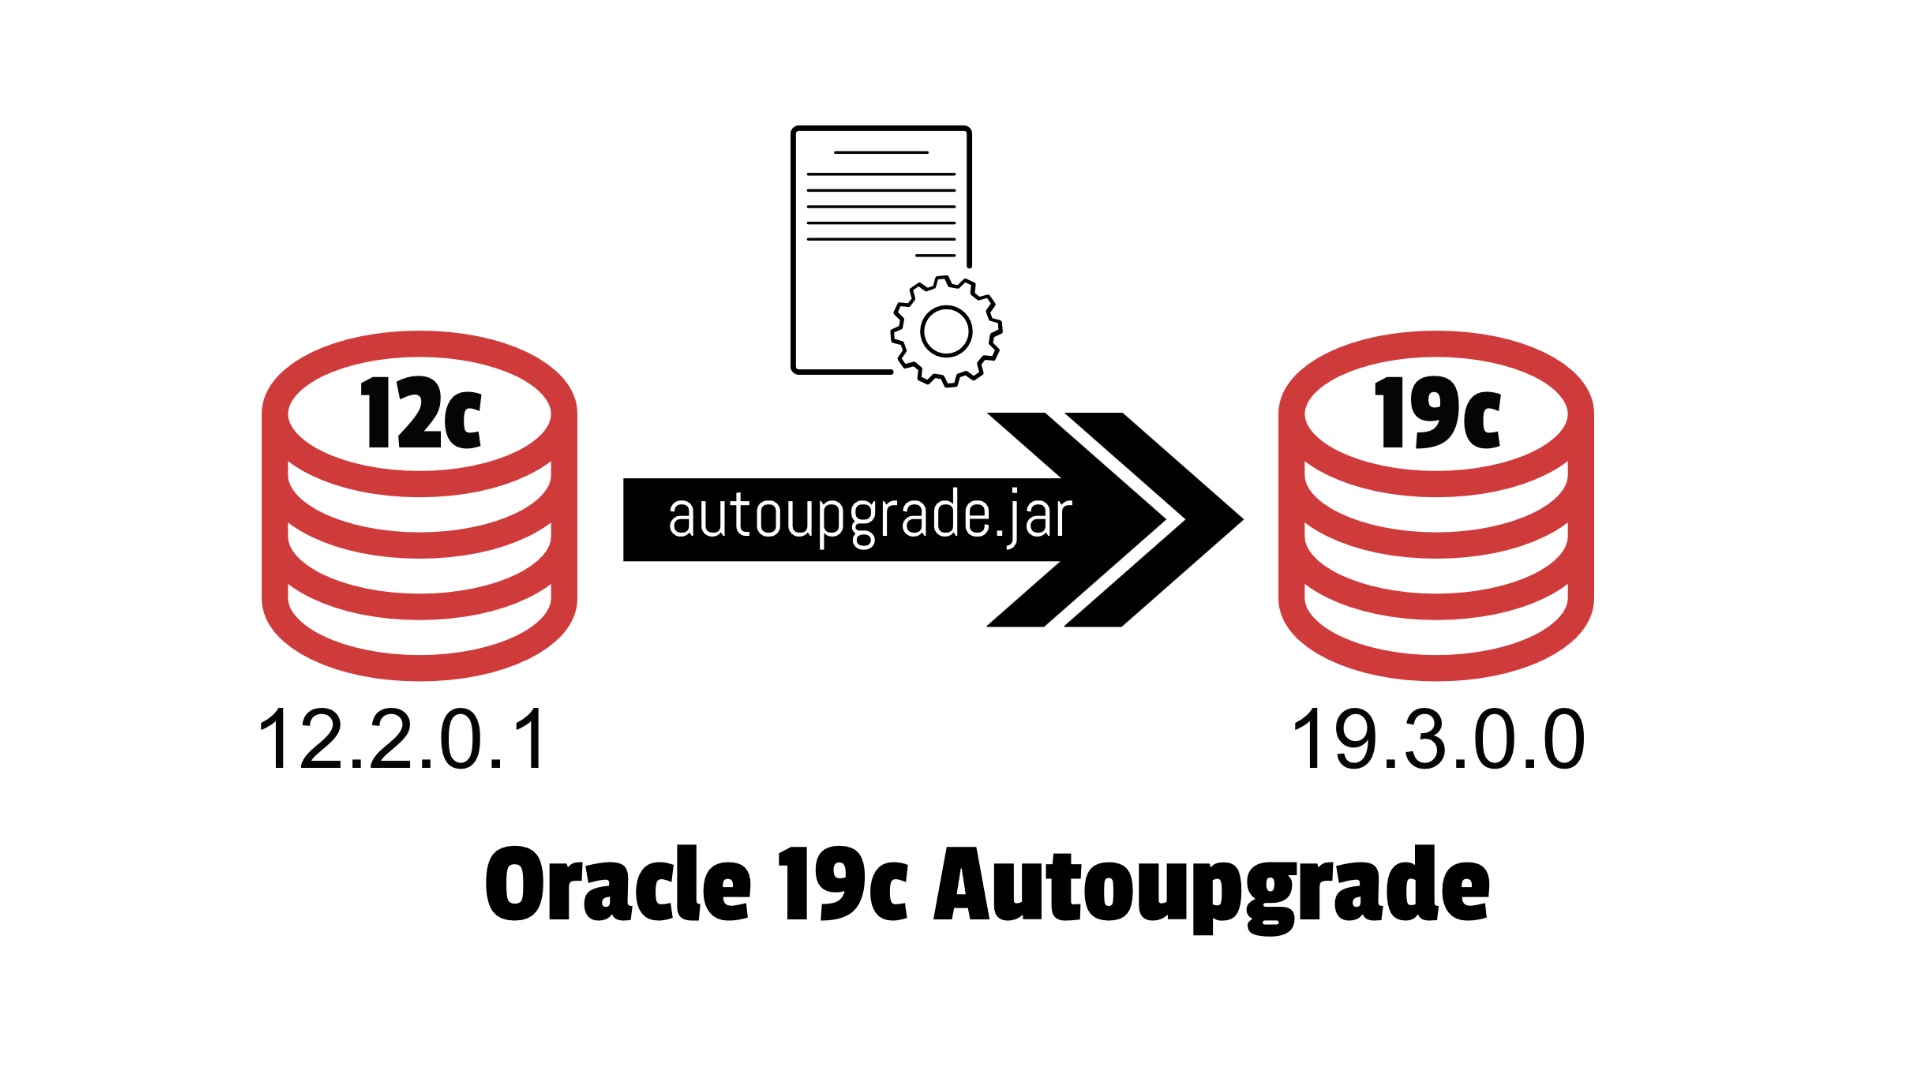 Oracle 19c Autoupgrade